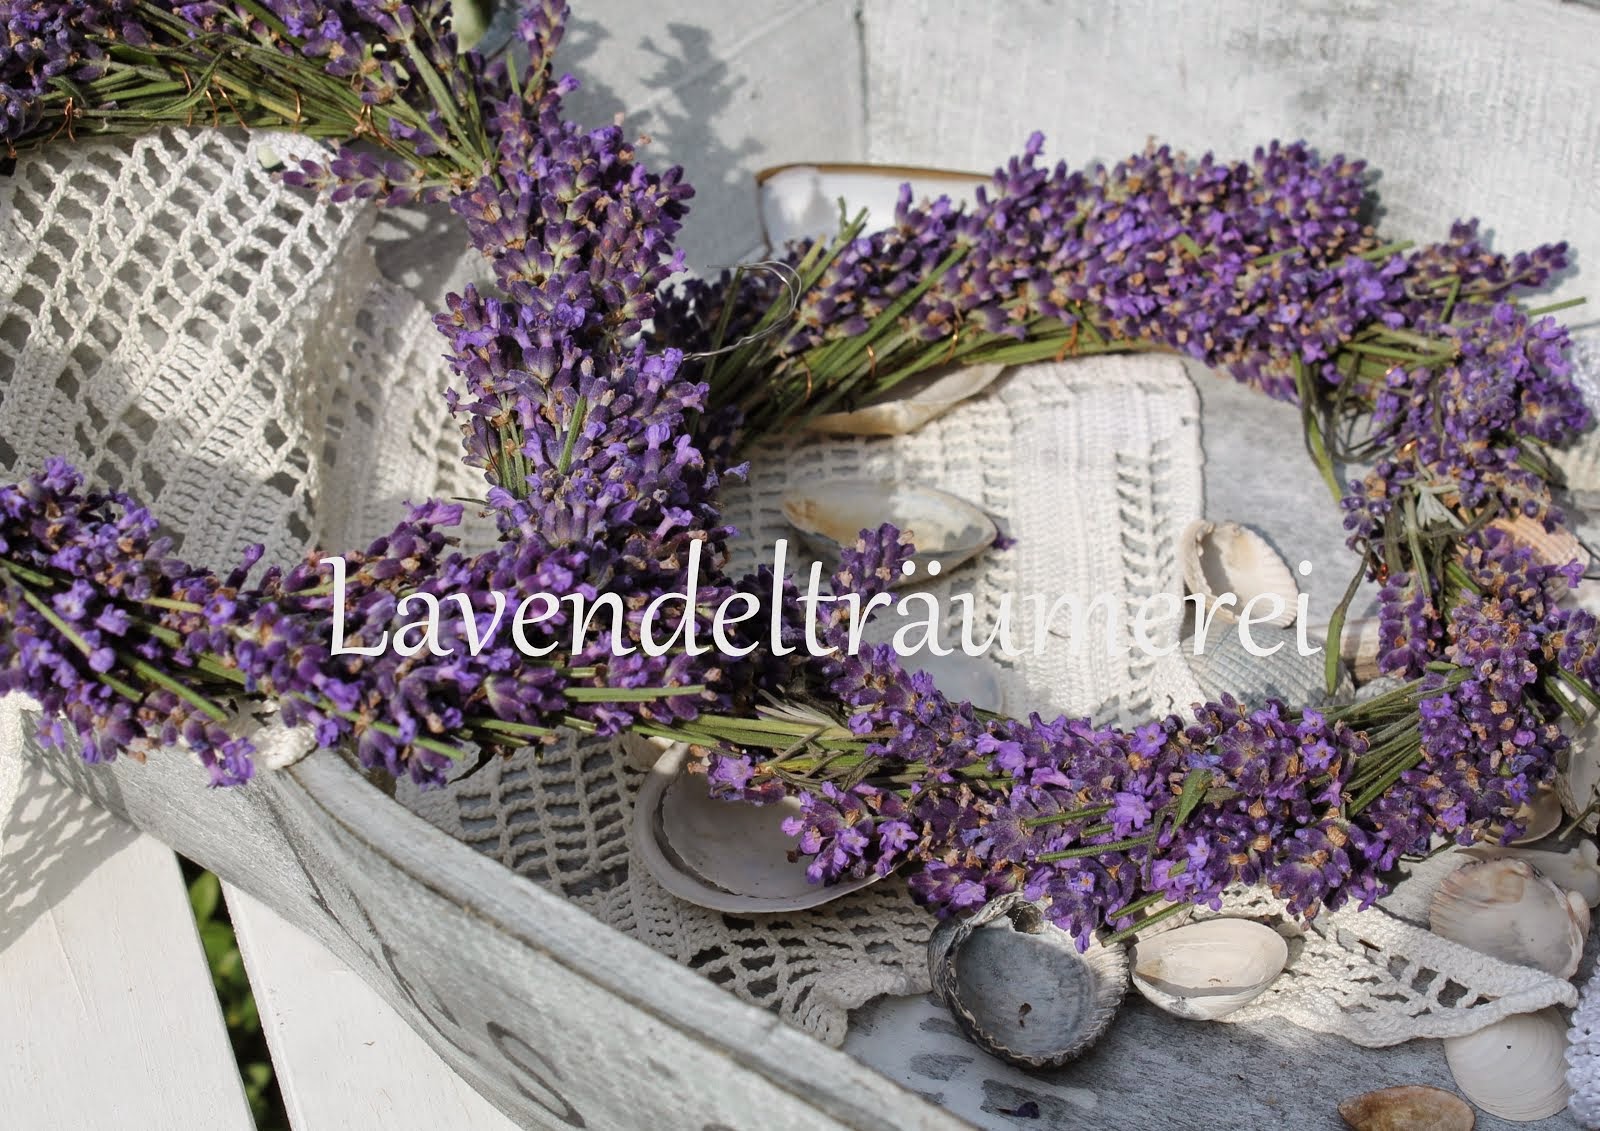 Lavendelherzen